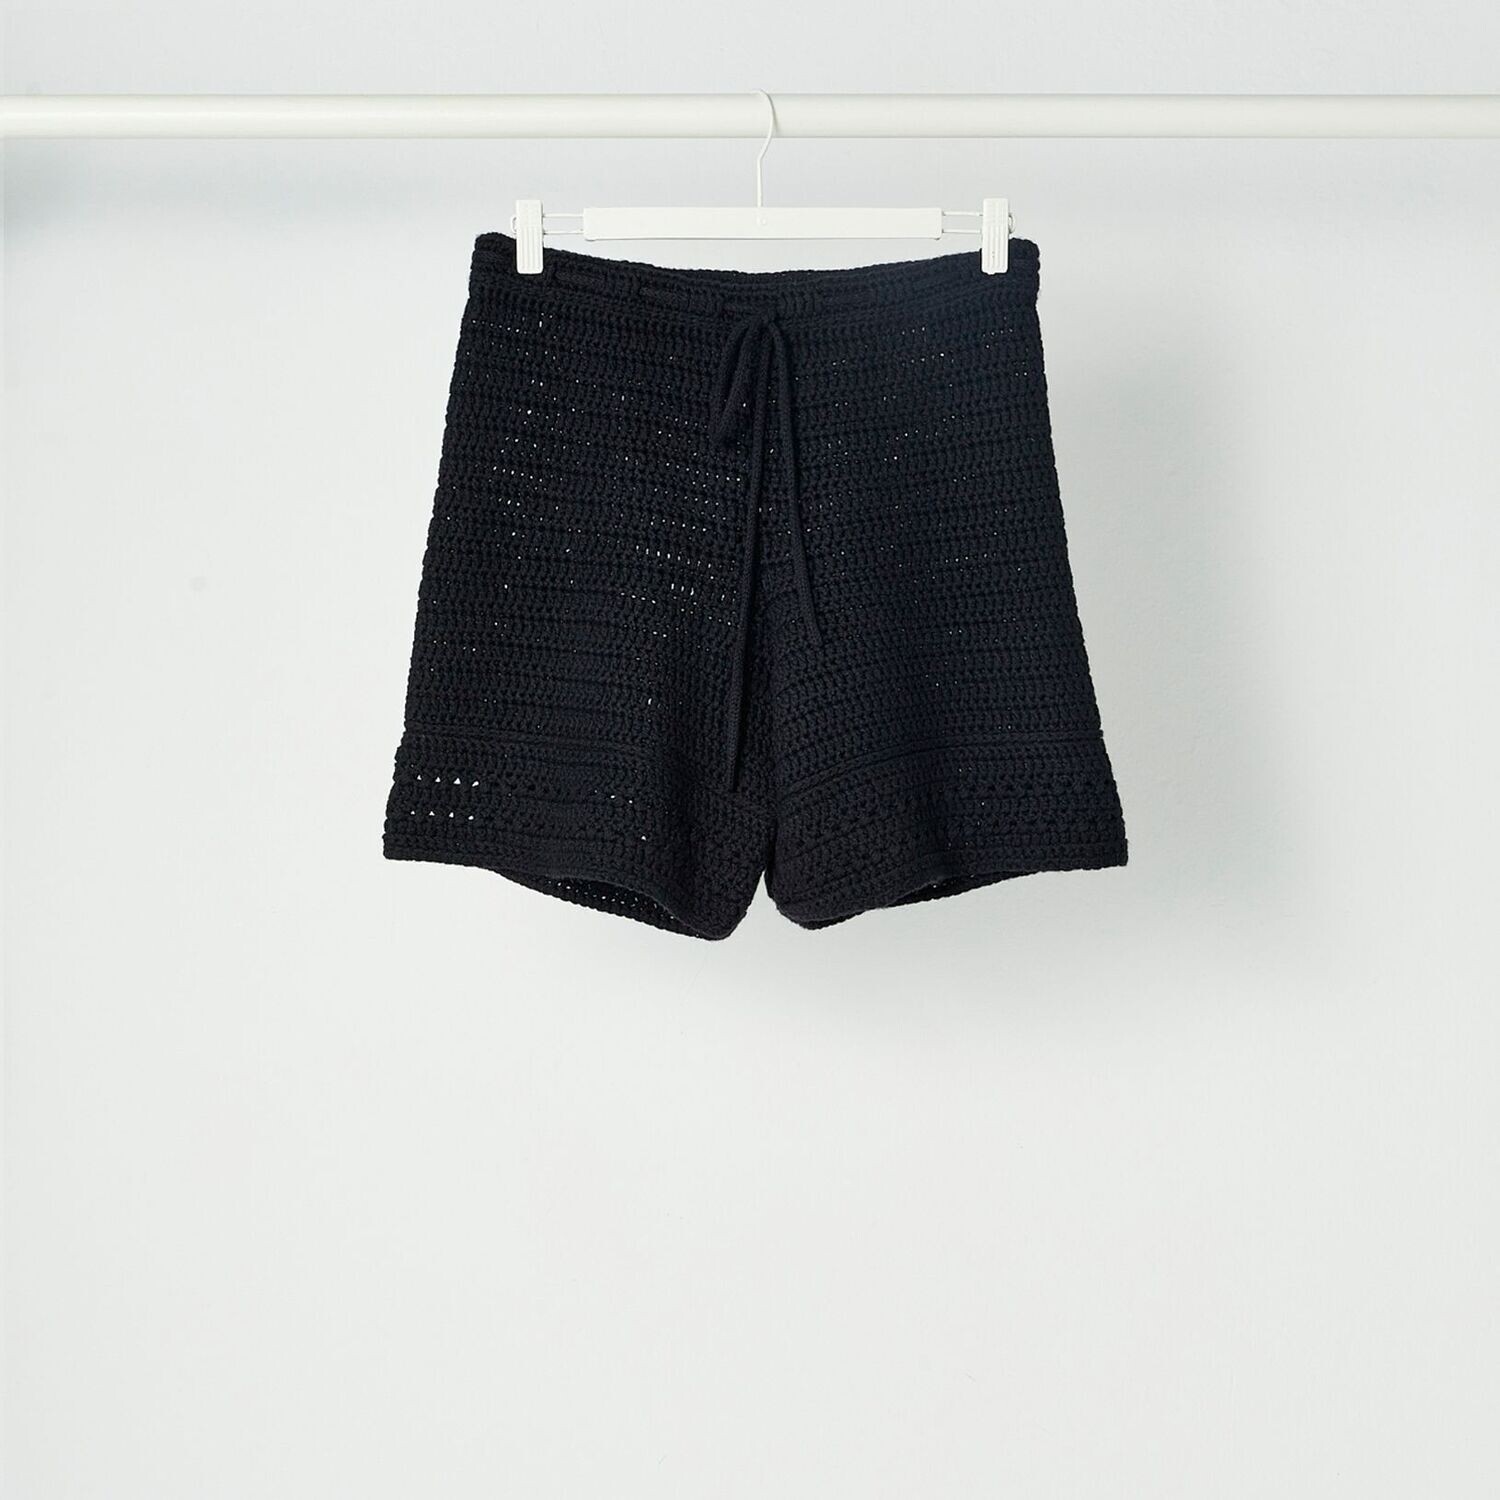 Häkel-Shorts LYAN SHORTS, Farbe: schwarz, Größe: XS/S